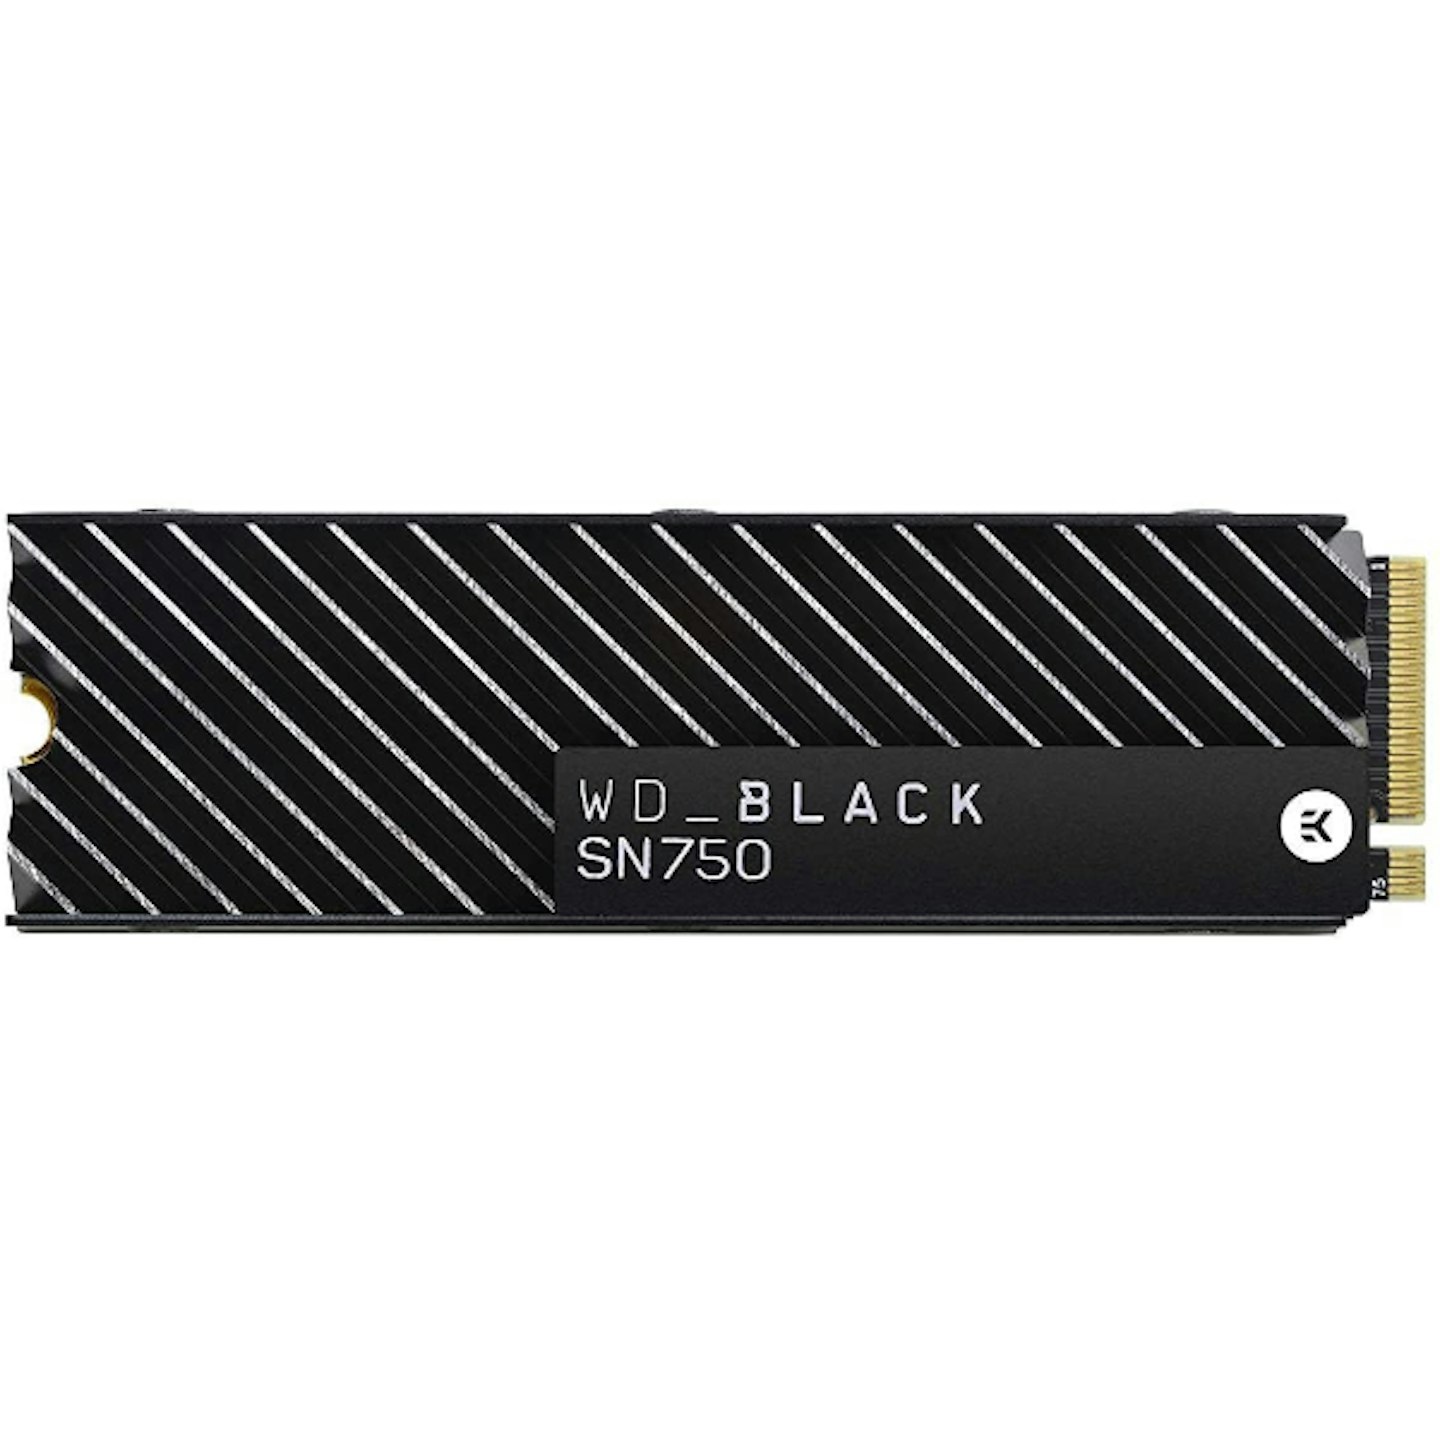 WD_BLACK SN750 NVMe M.2 SSD with heatsink, 500GB - 2TB